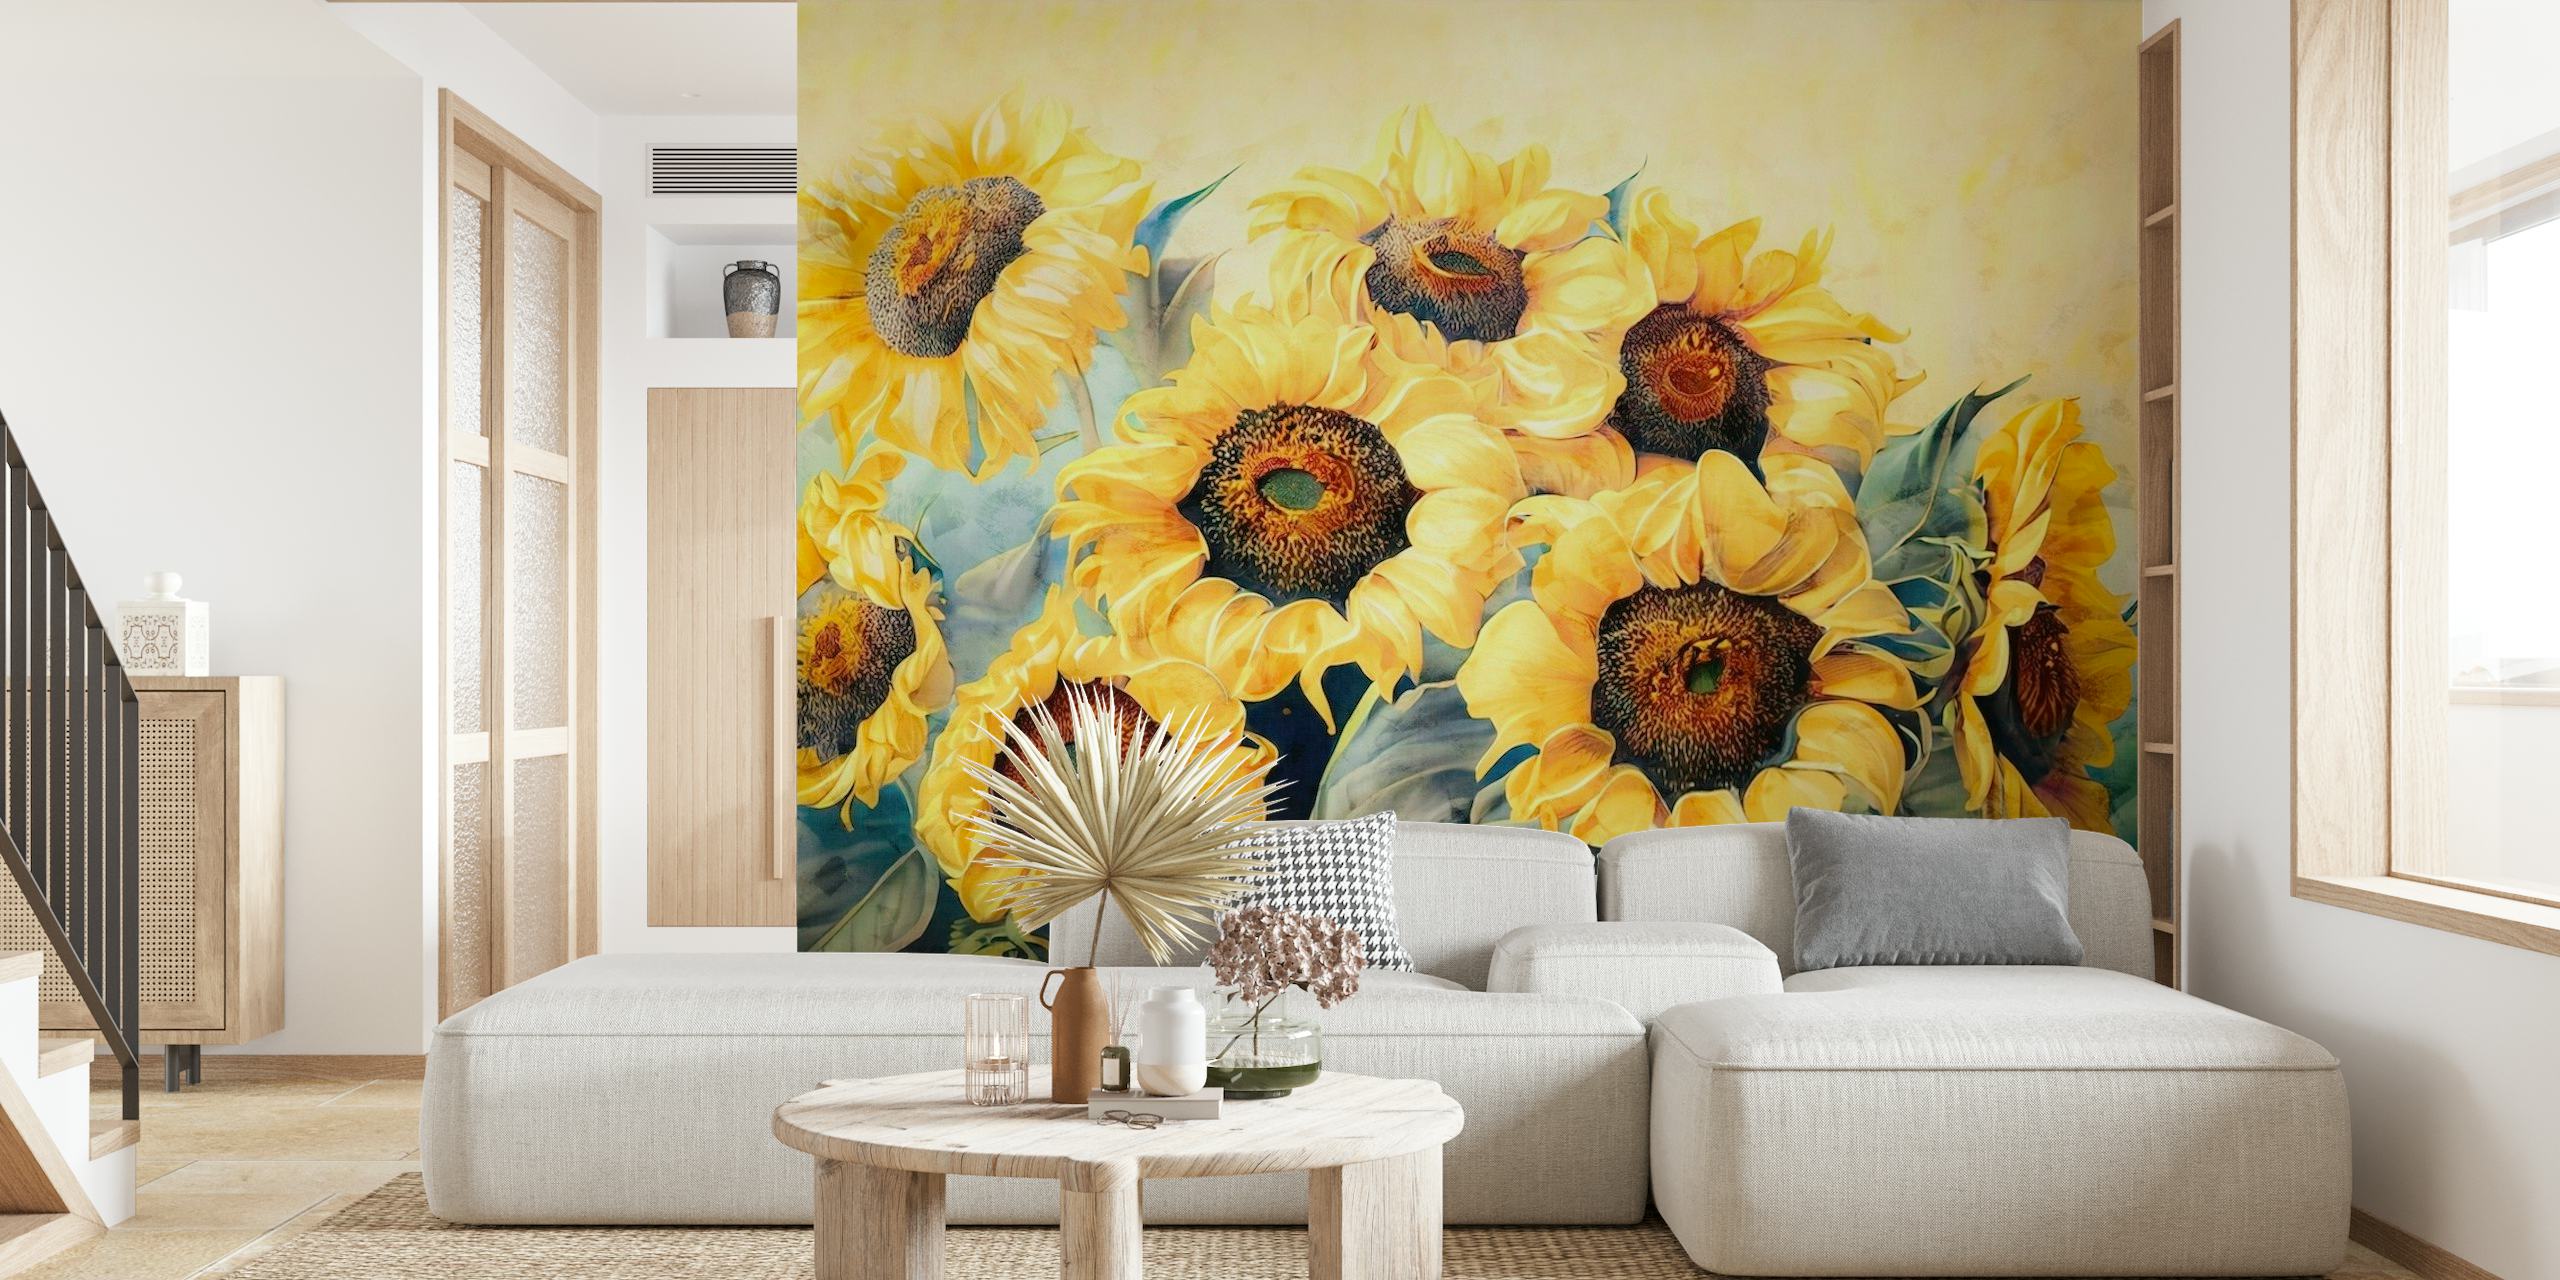 Huge Sunflowers papel pintado